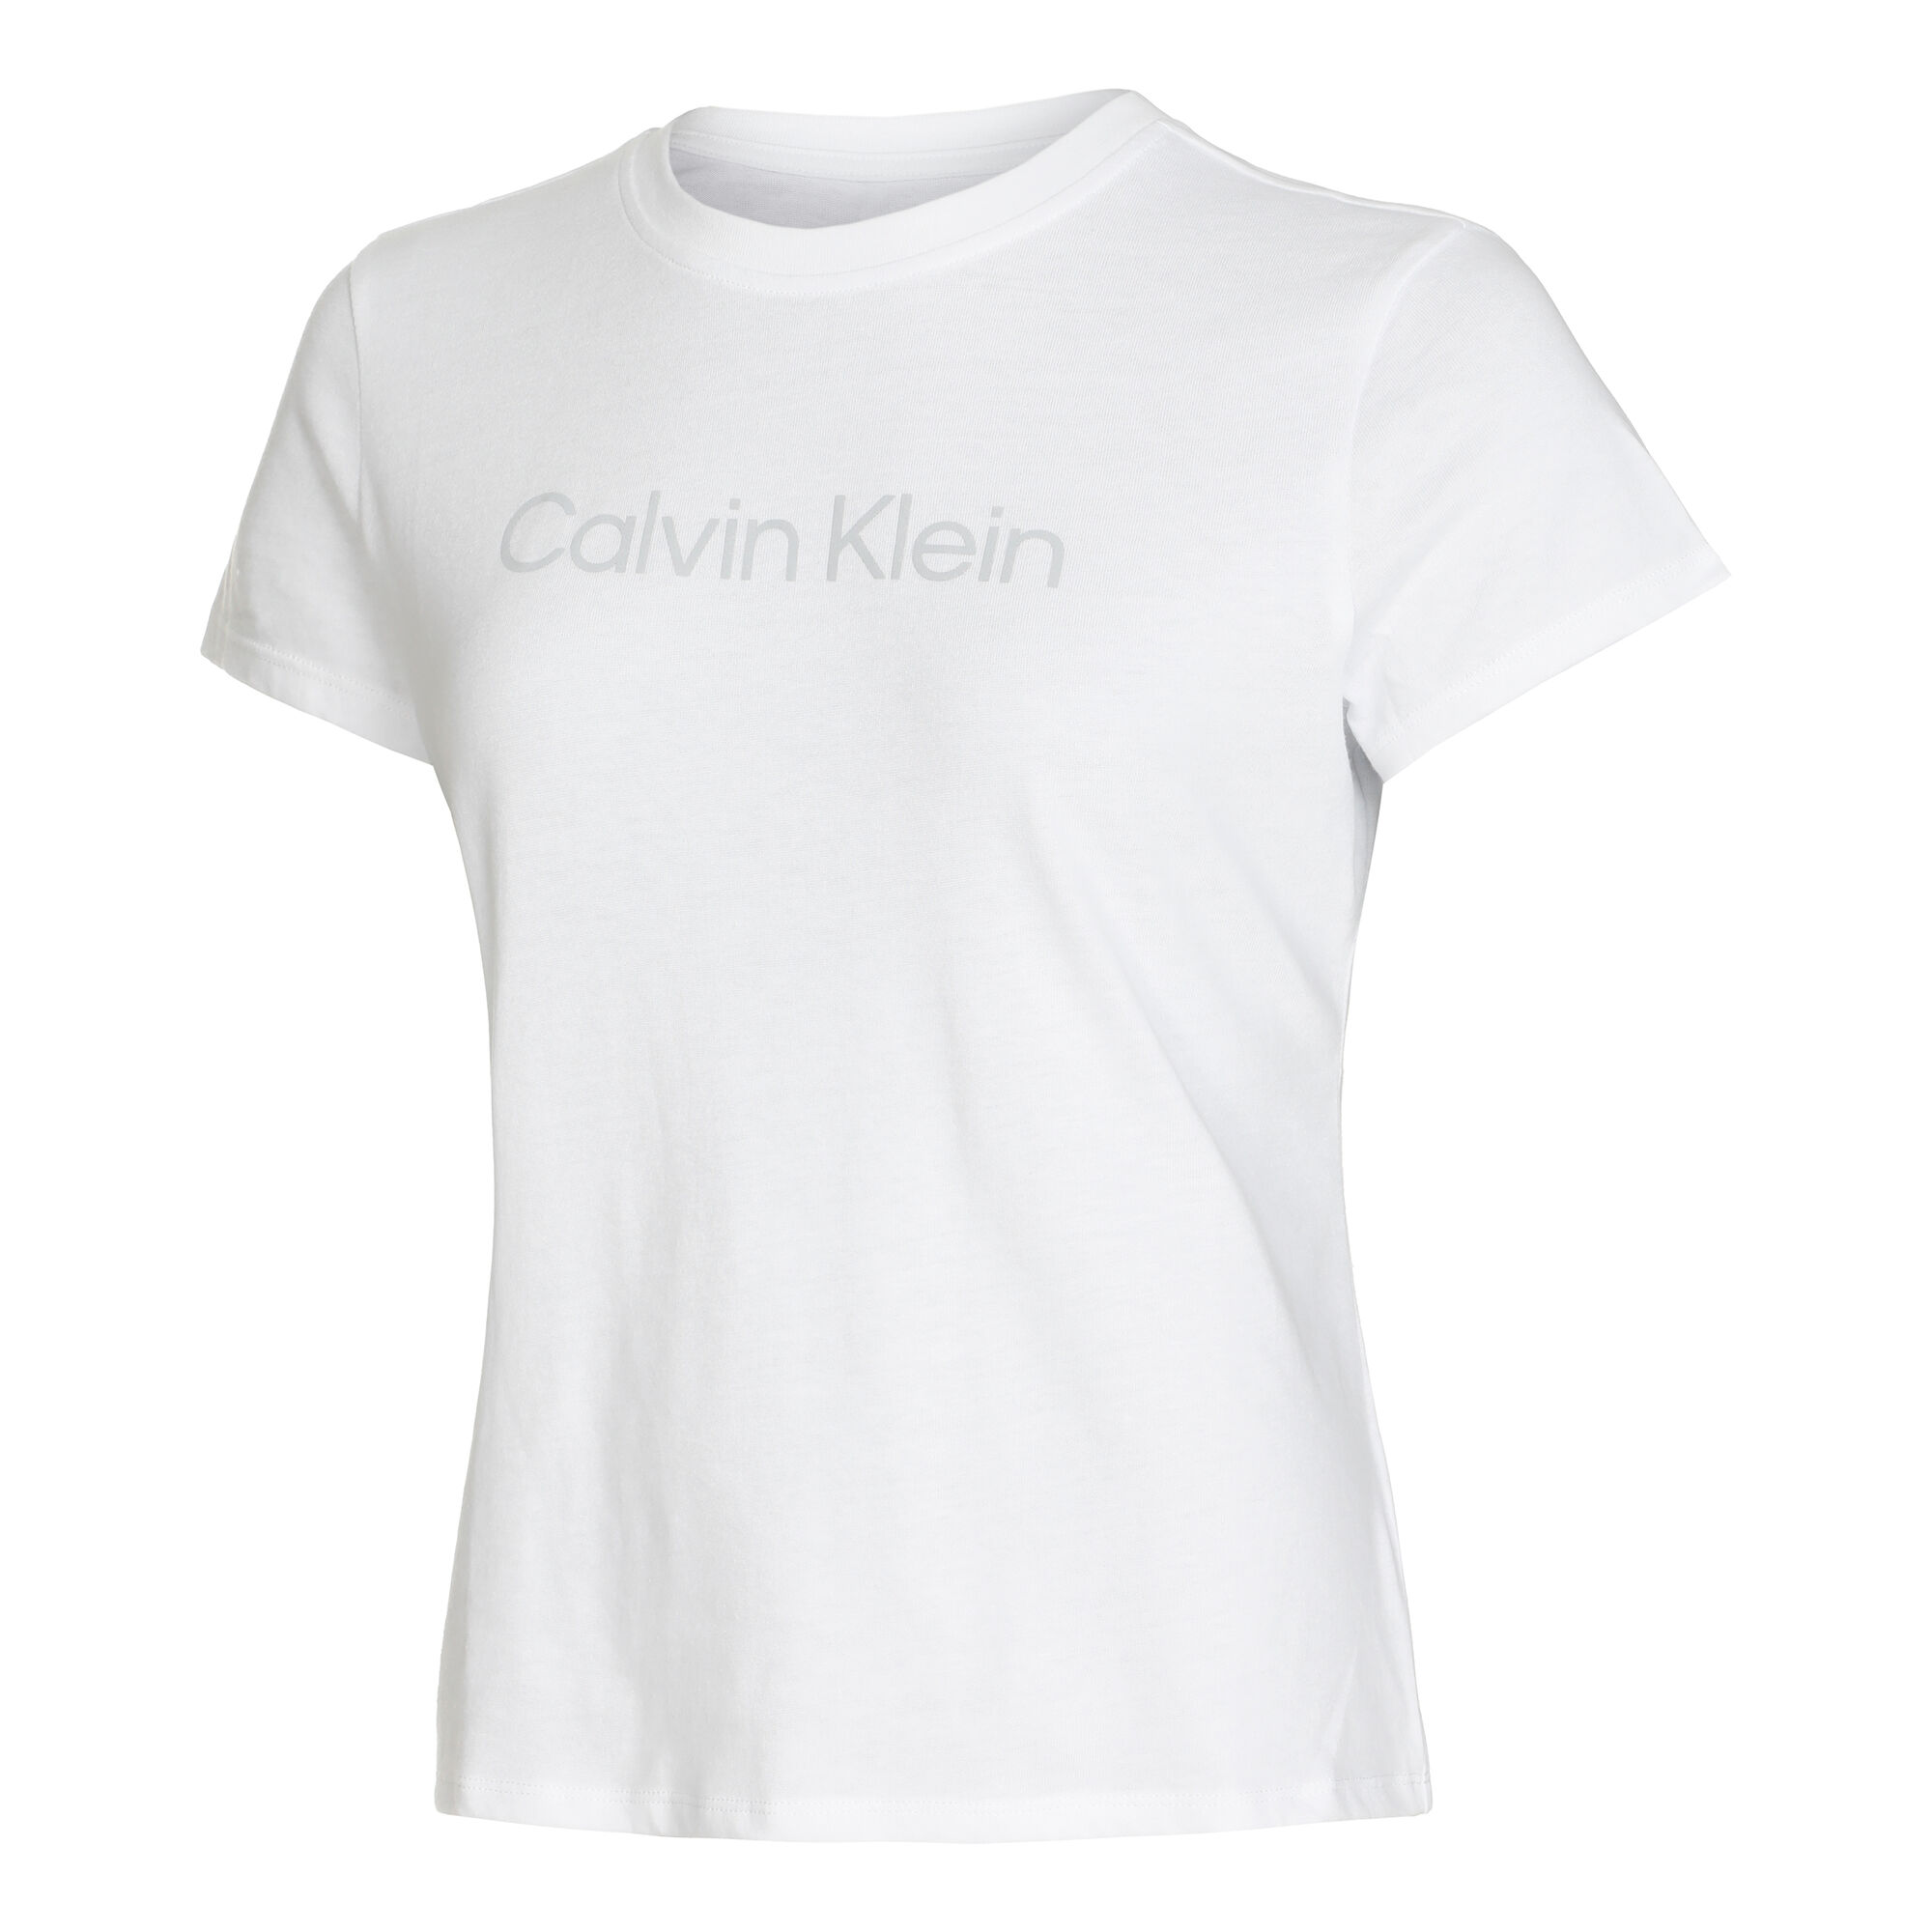 Buy Calvin Klein Performance T-Shirt Women White online